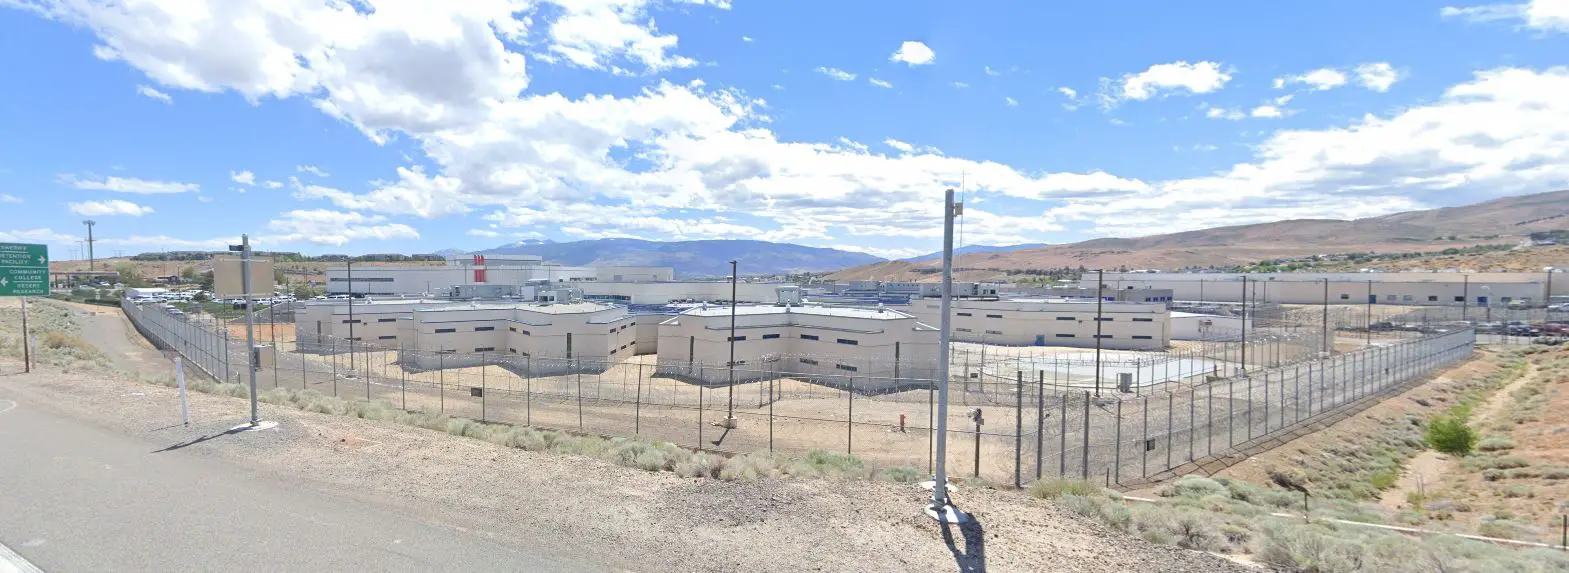 Photos Washoe County Detention Facility 2